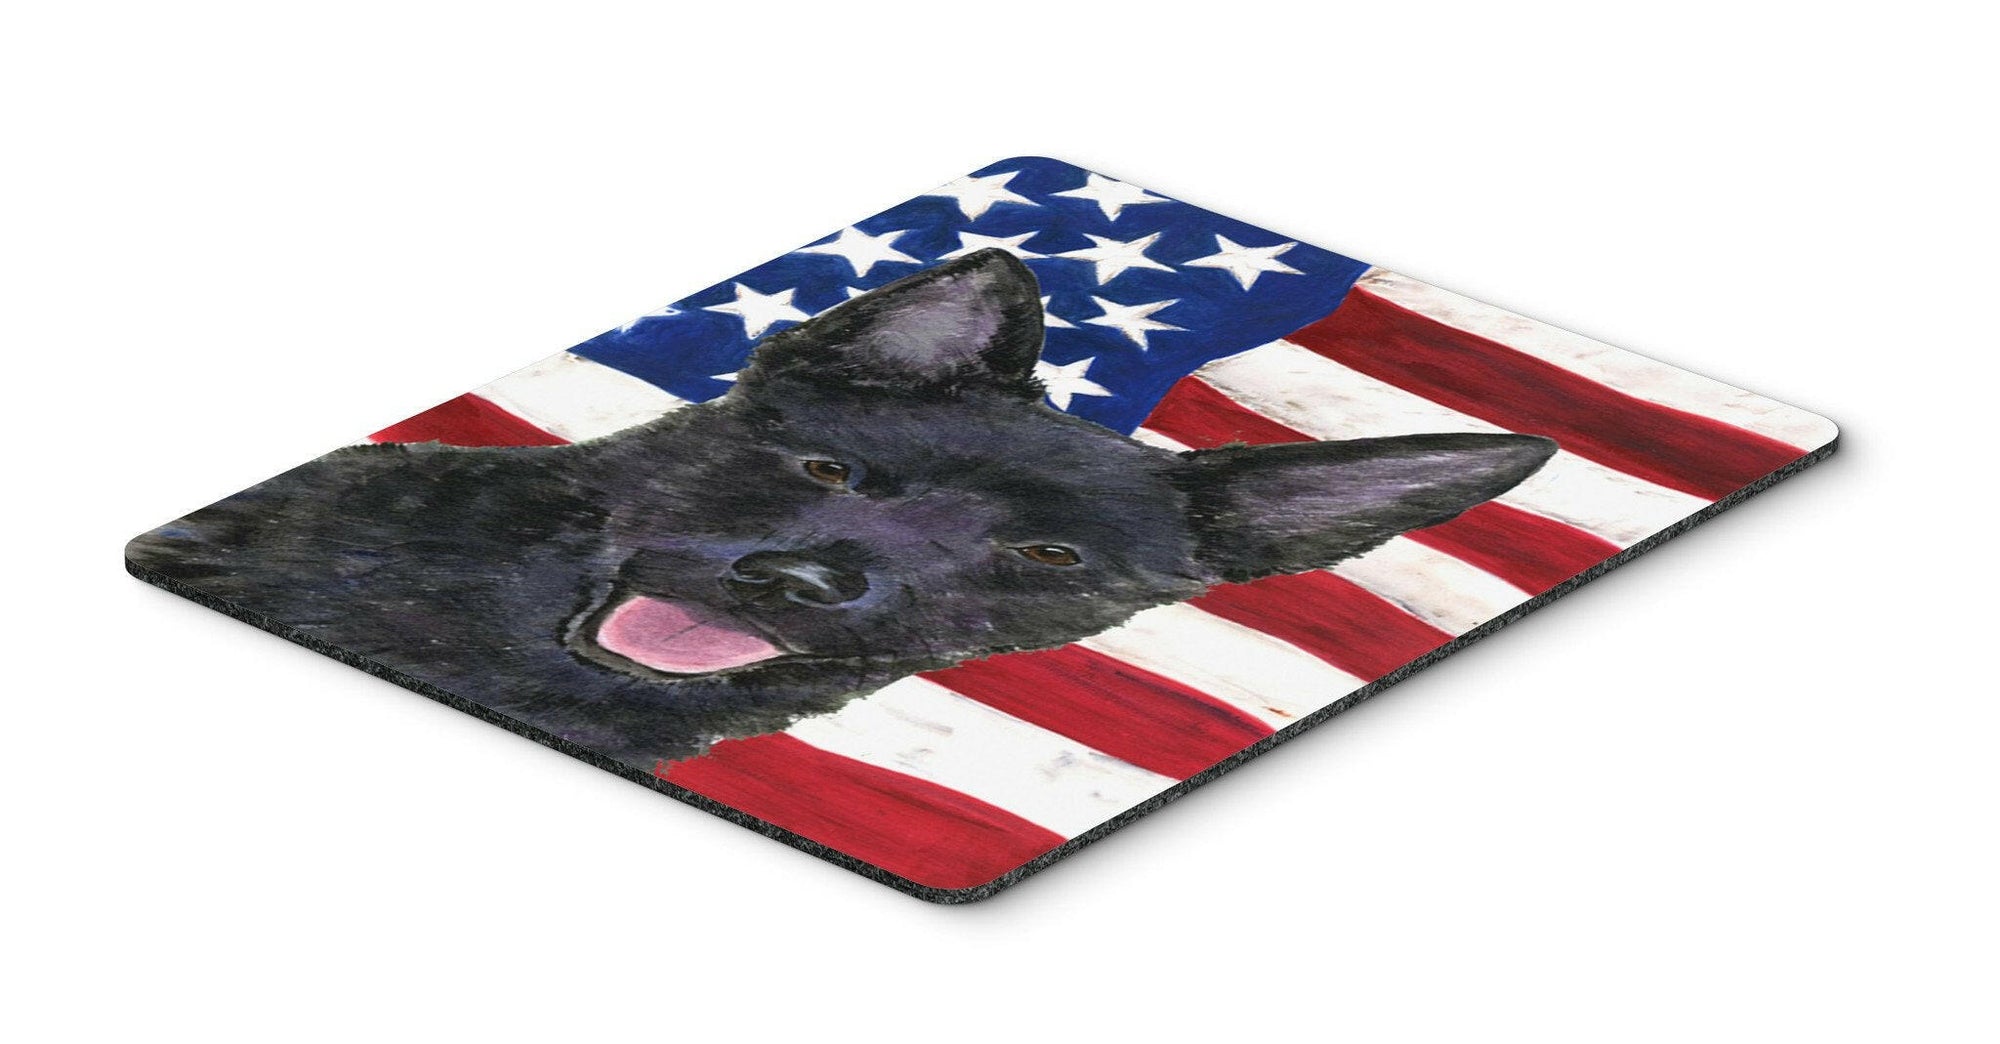 USA American Flag with Australian Kelpie Mouse Pad, Hot Pad or Trivet by Caroline's Treasures